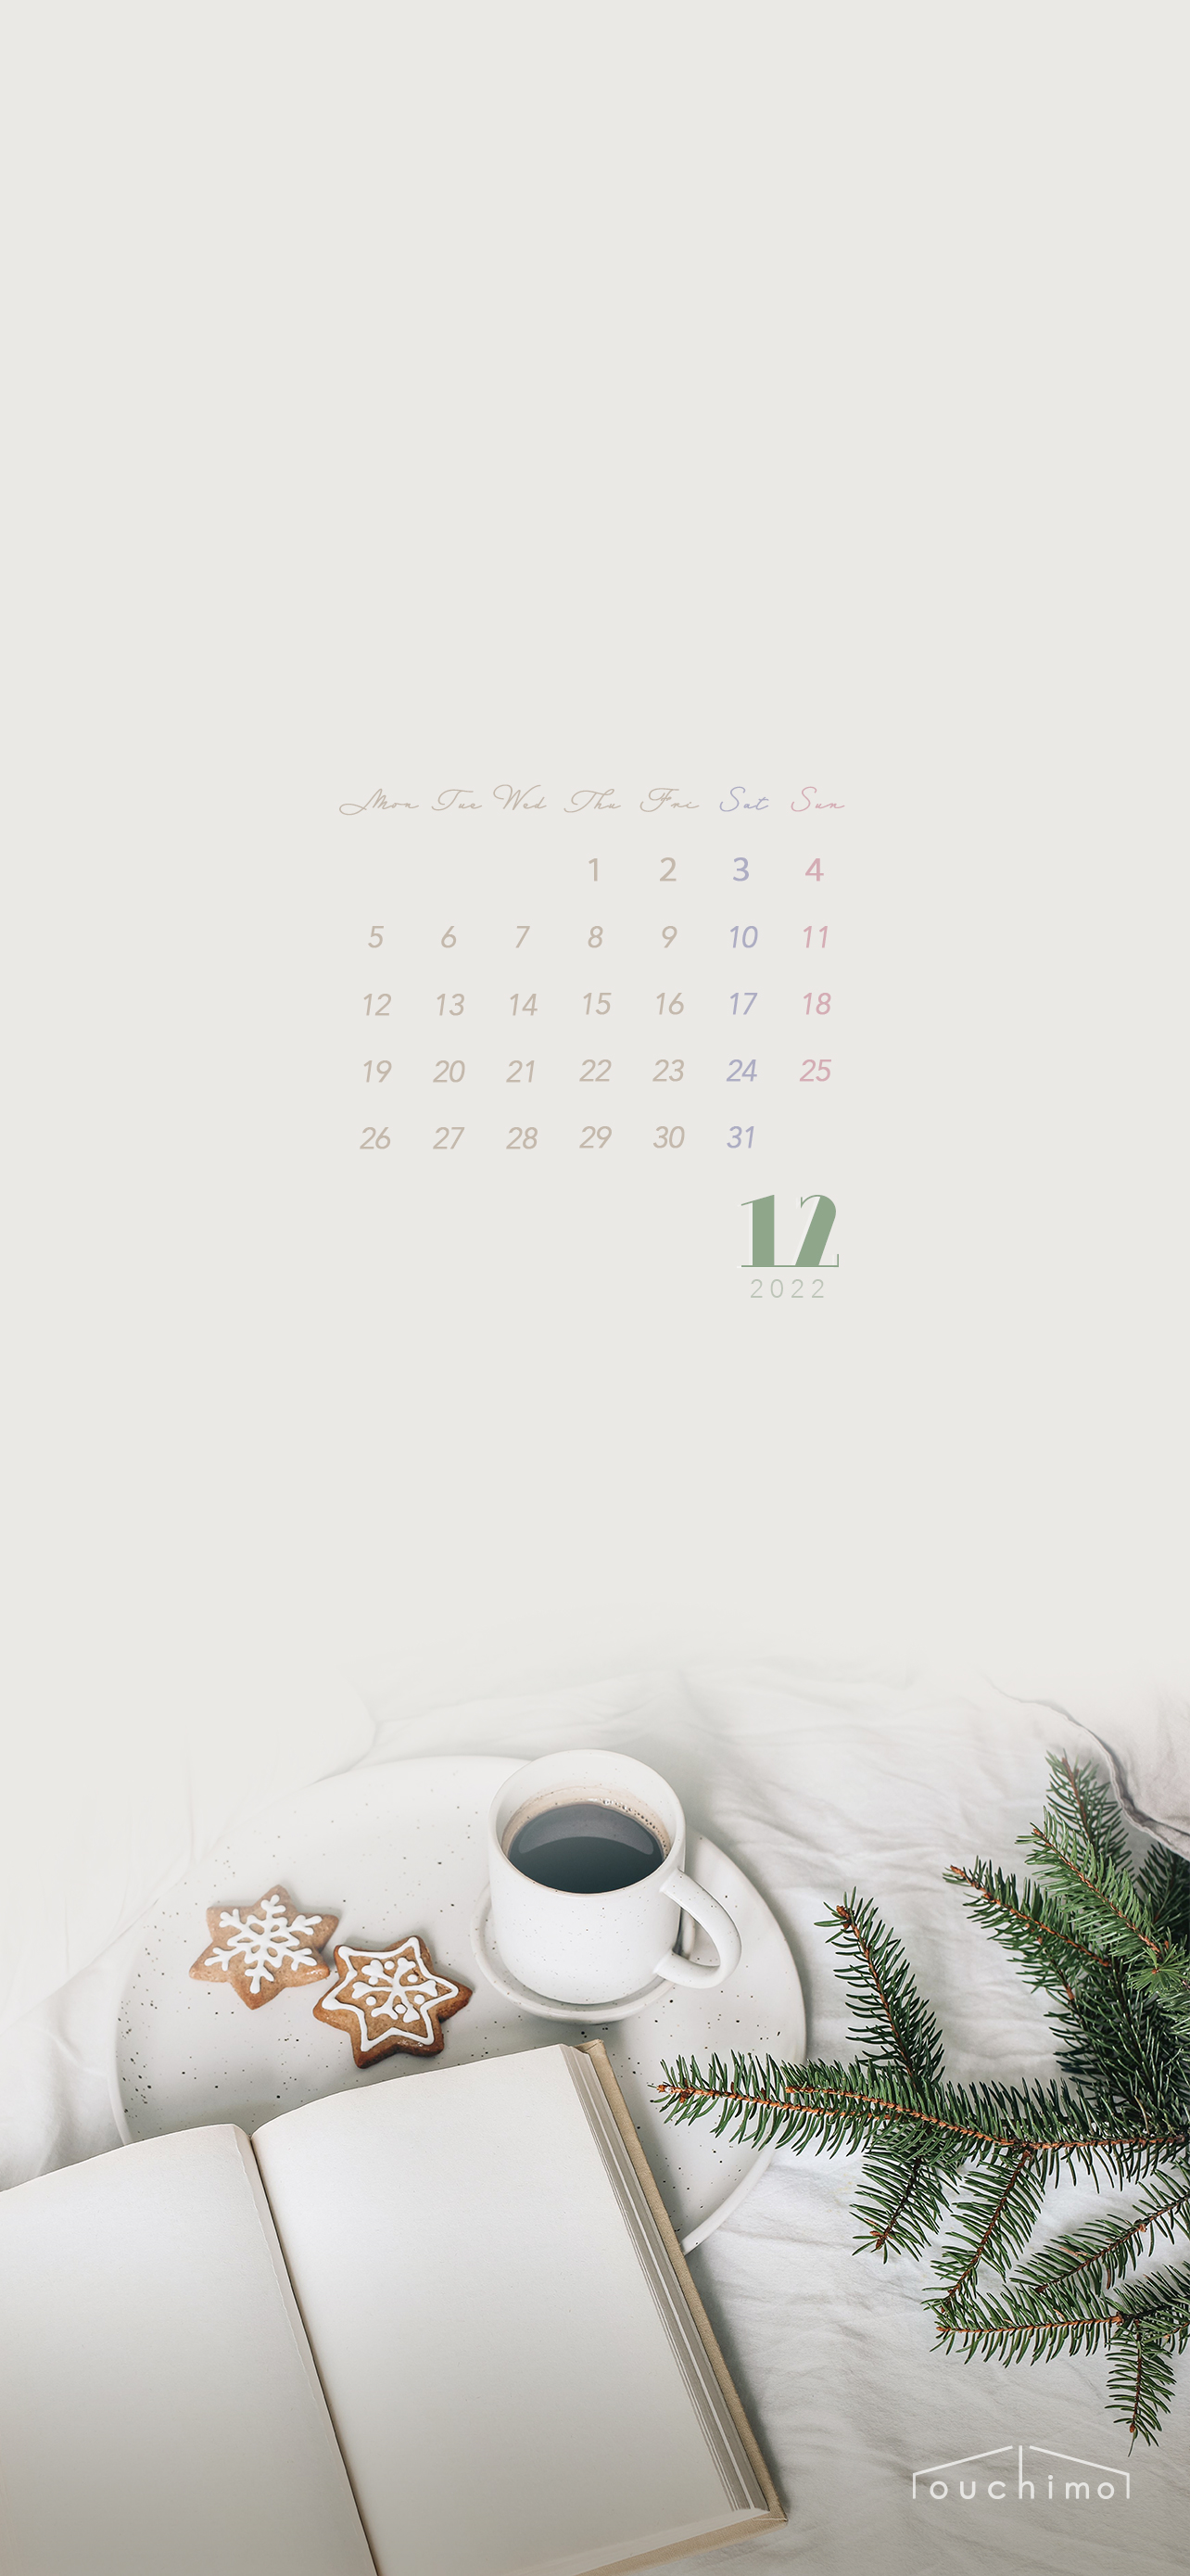 Iphone壁紙 Ouchimo特製22年12月のカレンダーできました Ouchimo